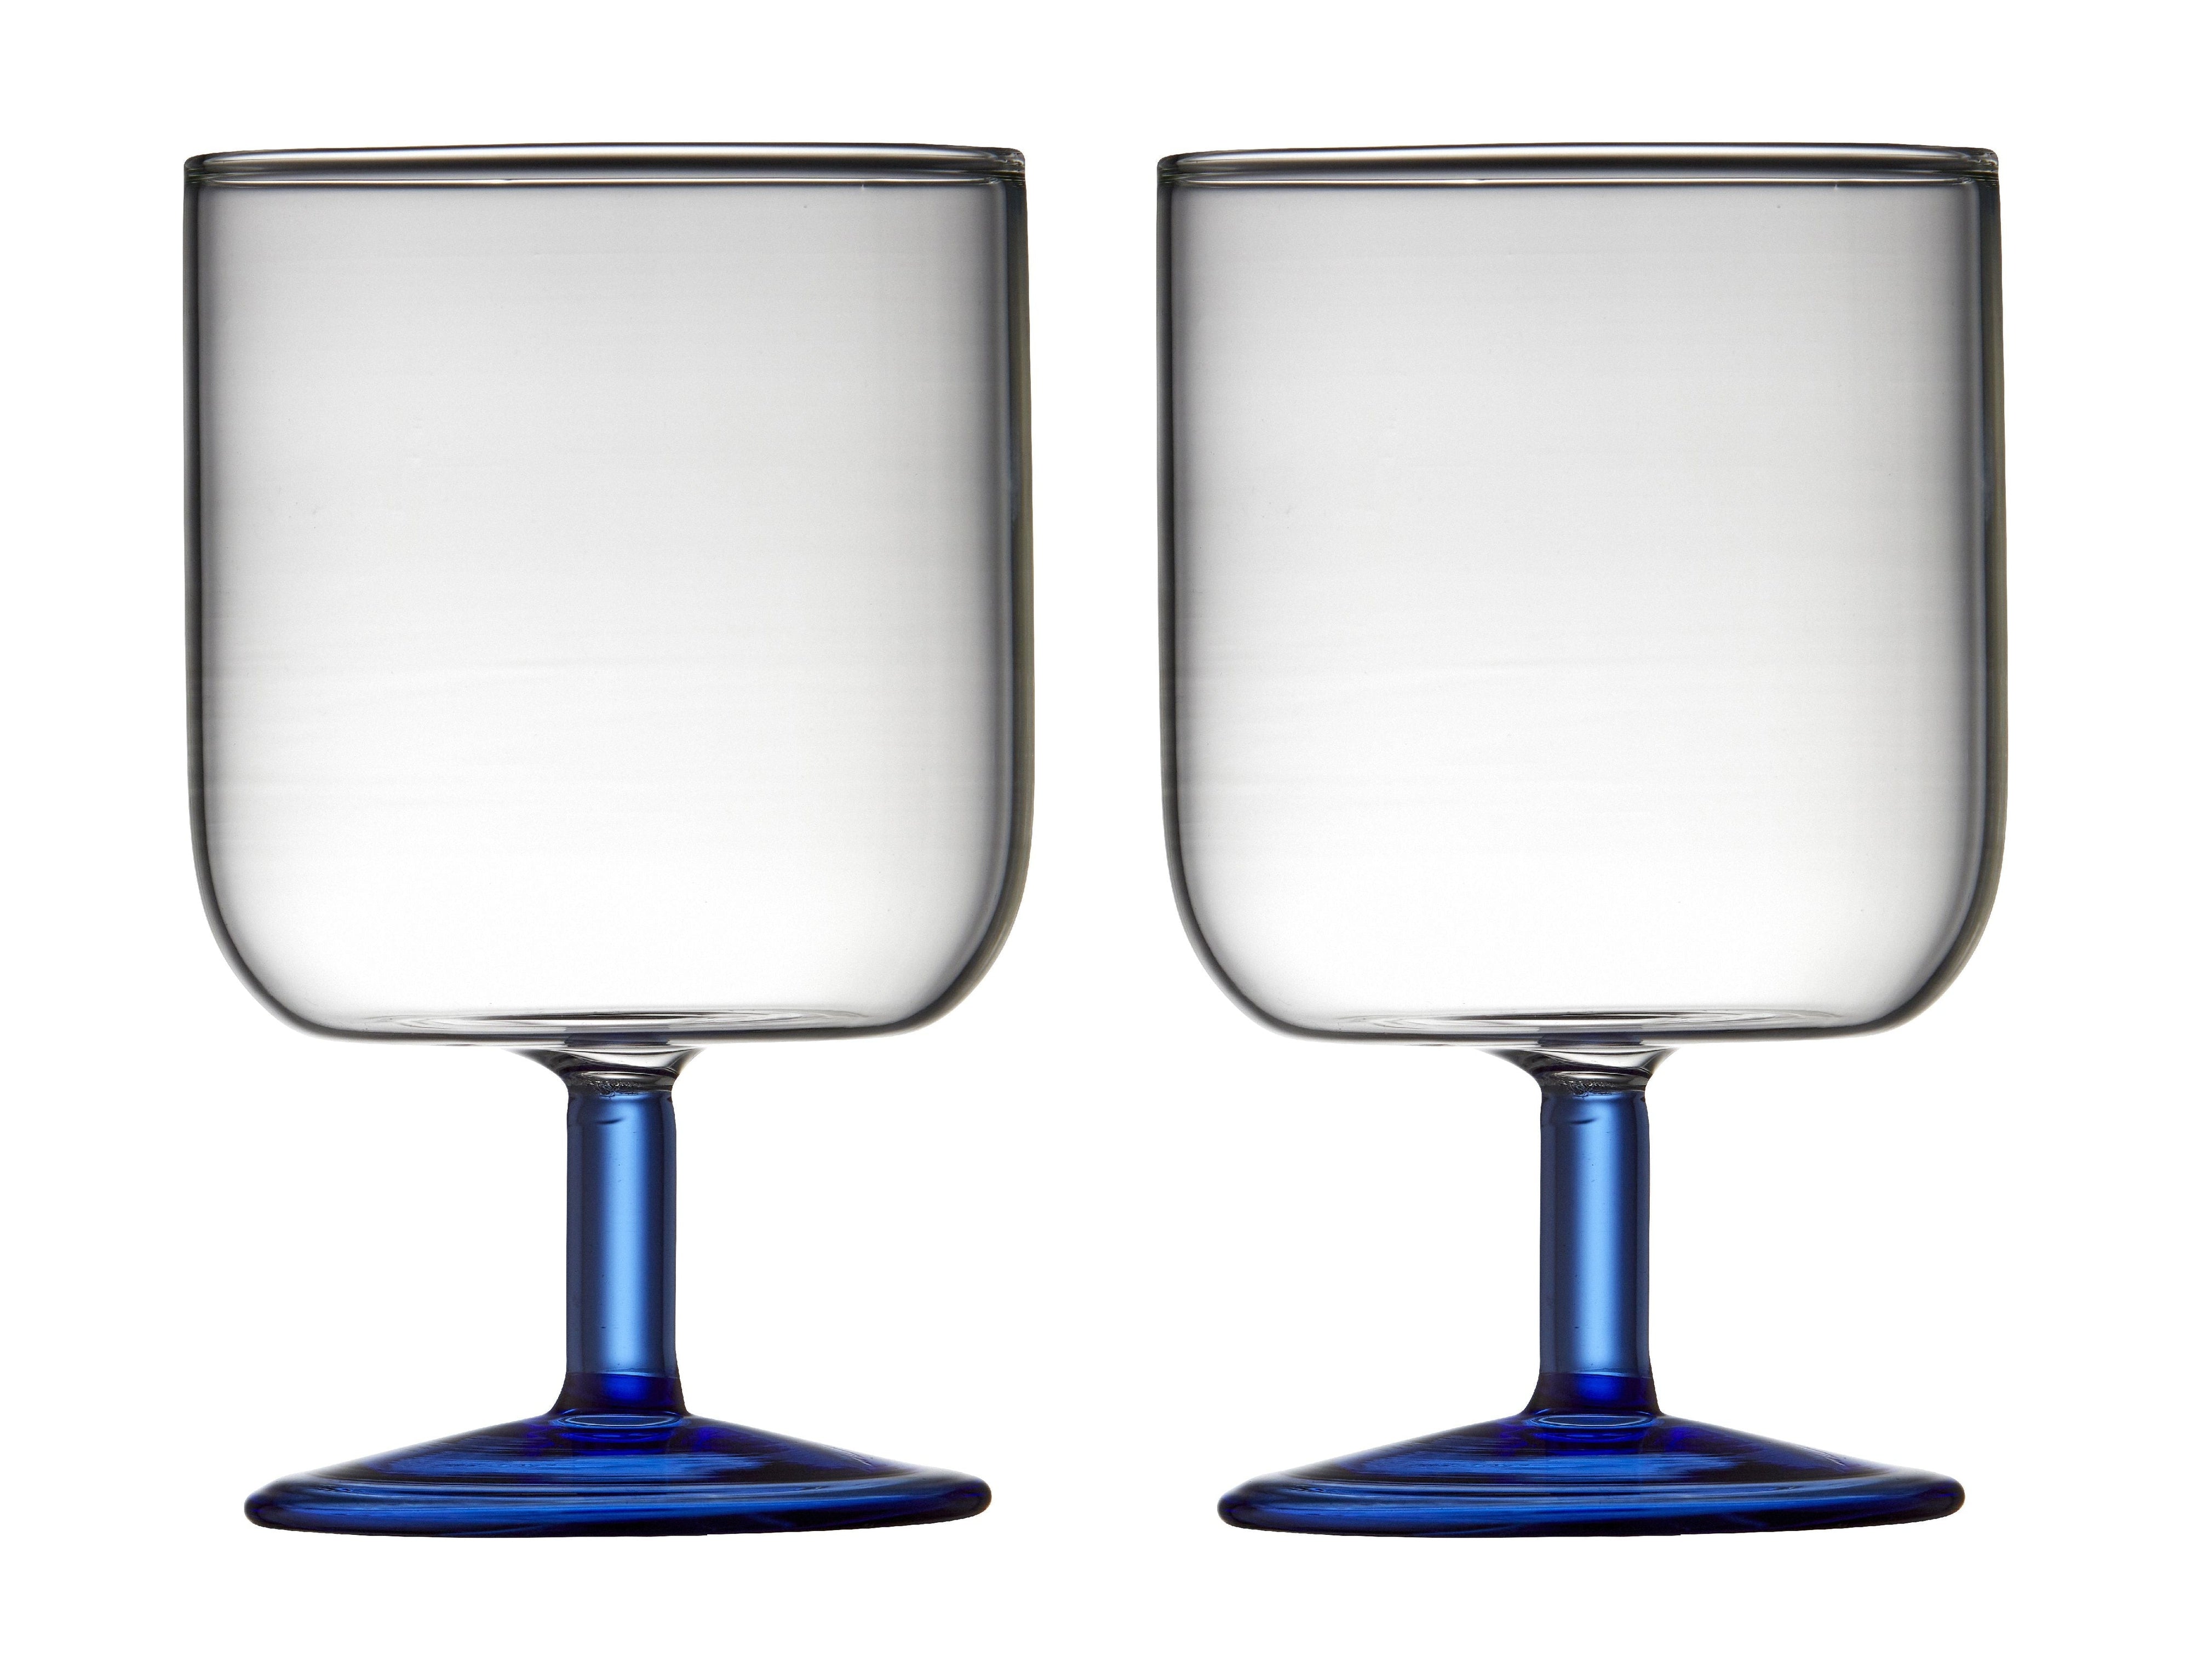 Lyngby Glas Torino Wine Glass 30 Cl 2 Pcs, Clear/Blue